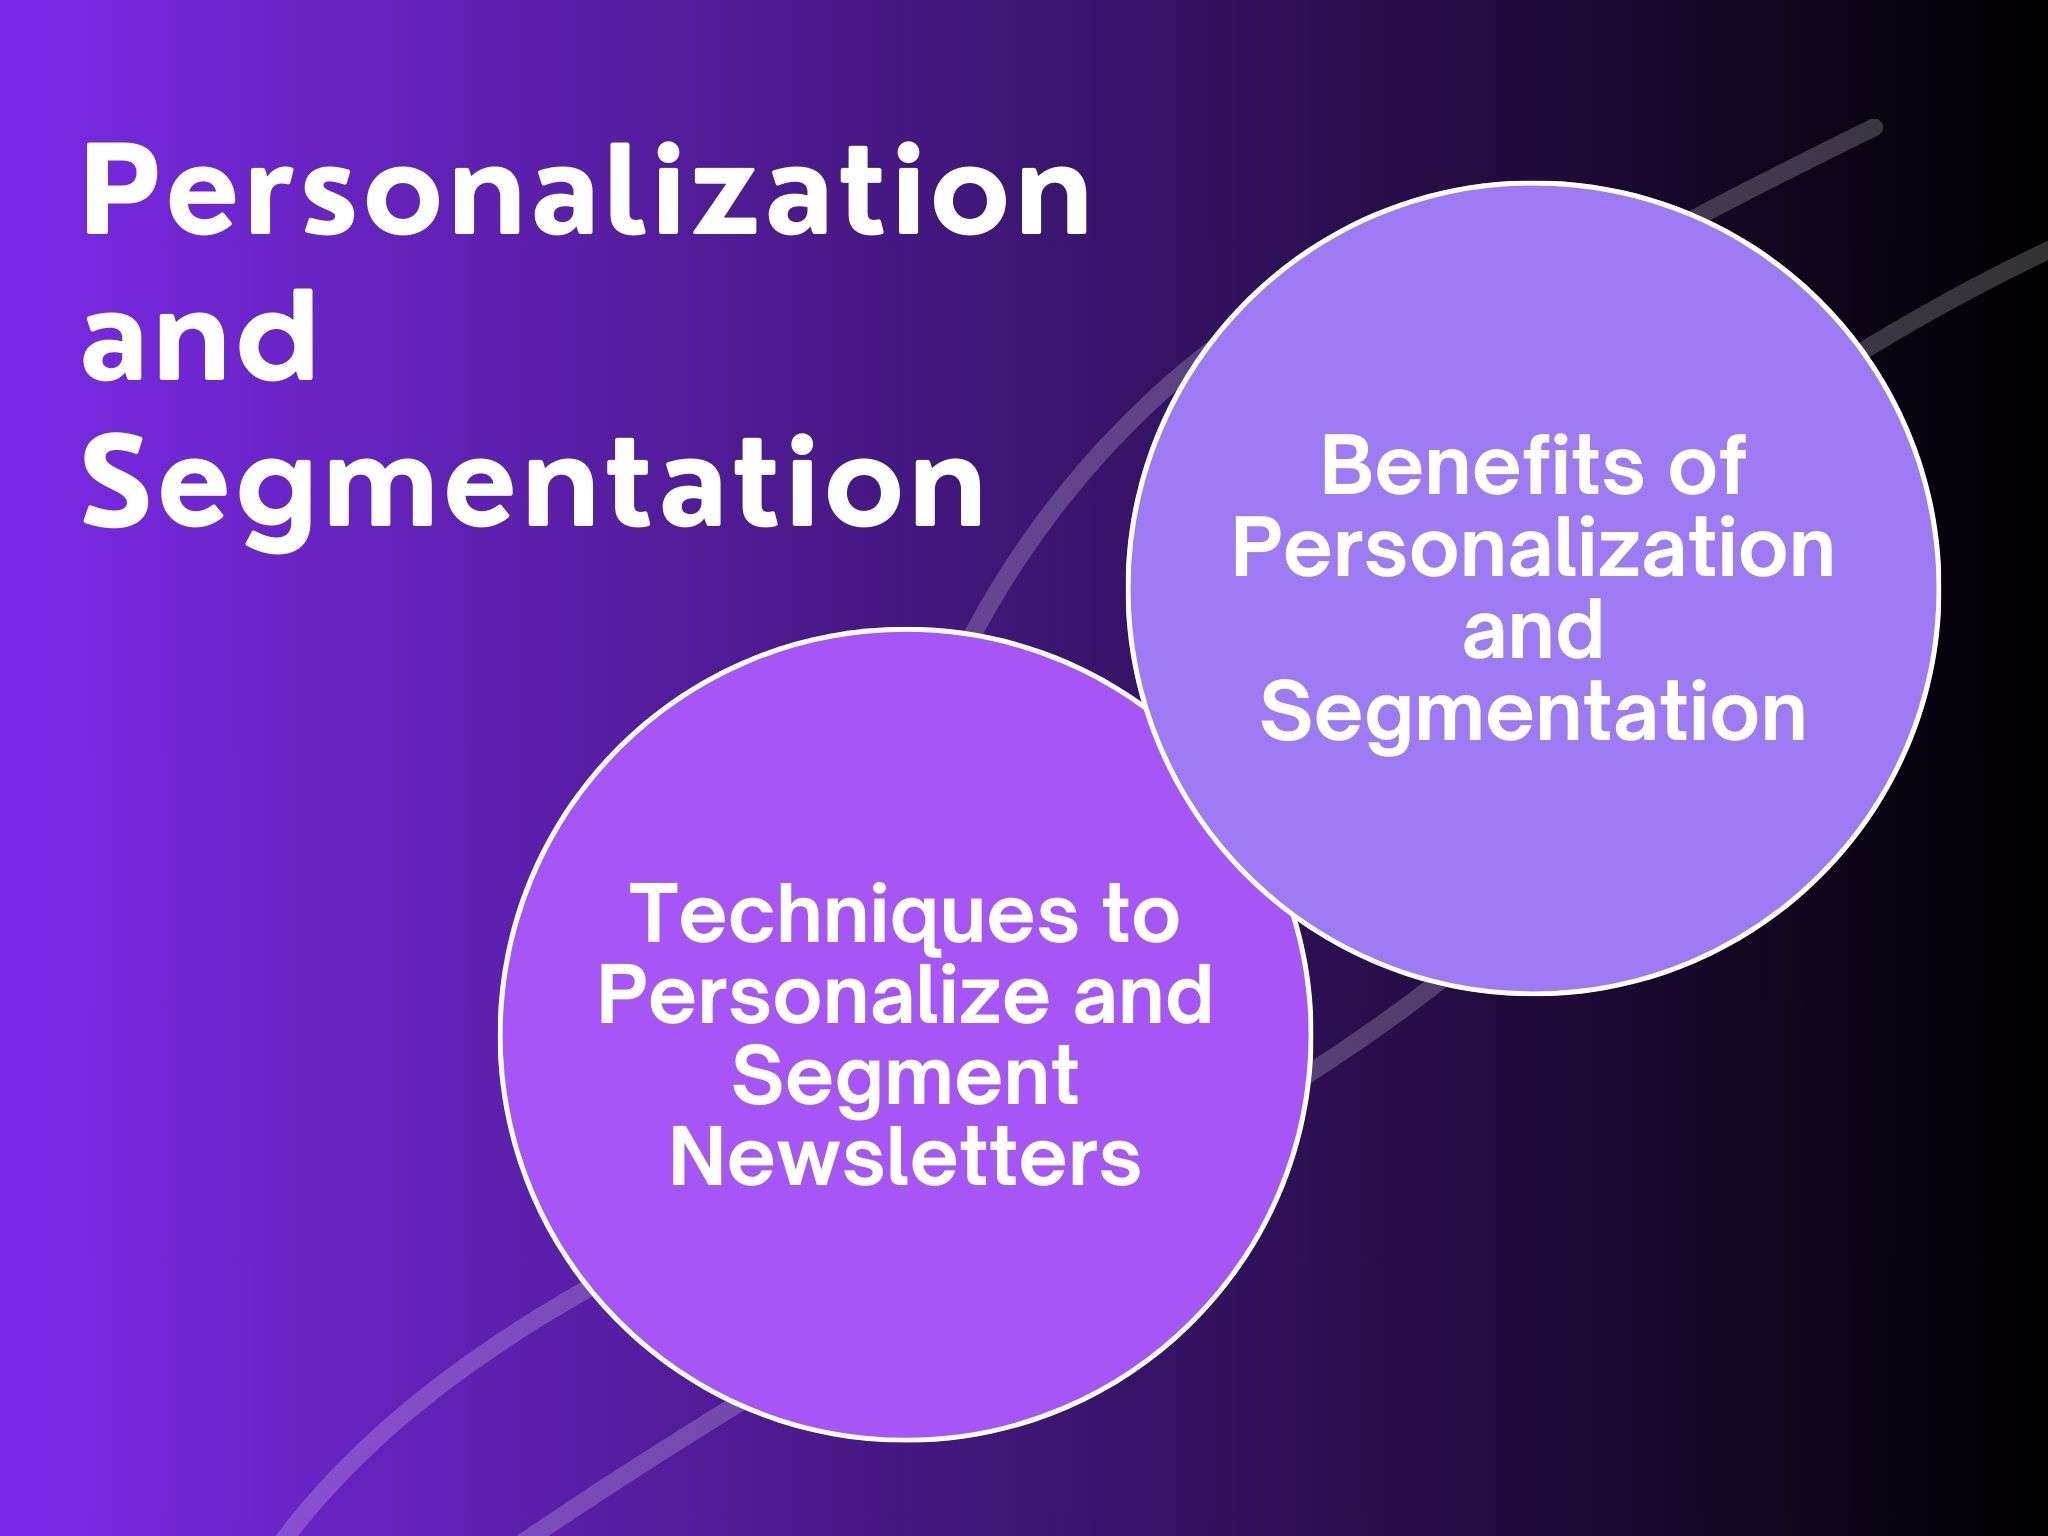 personalization and segmentation